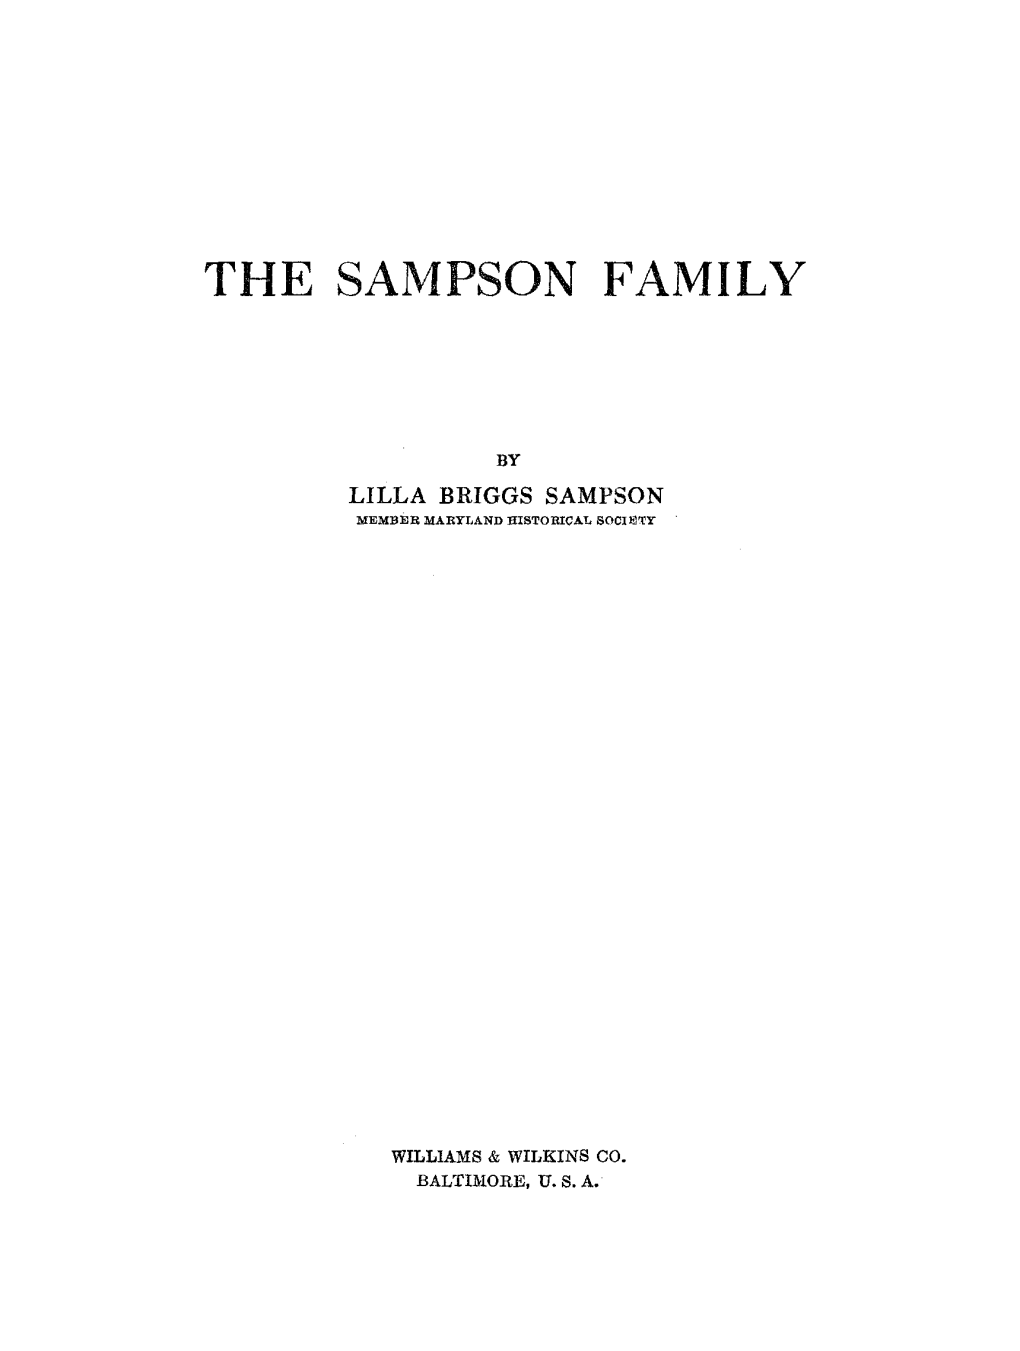 The Sampson Family